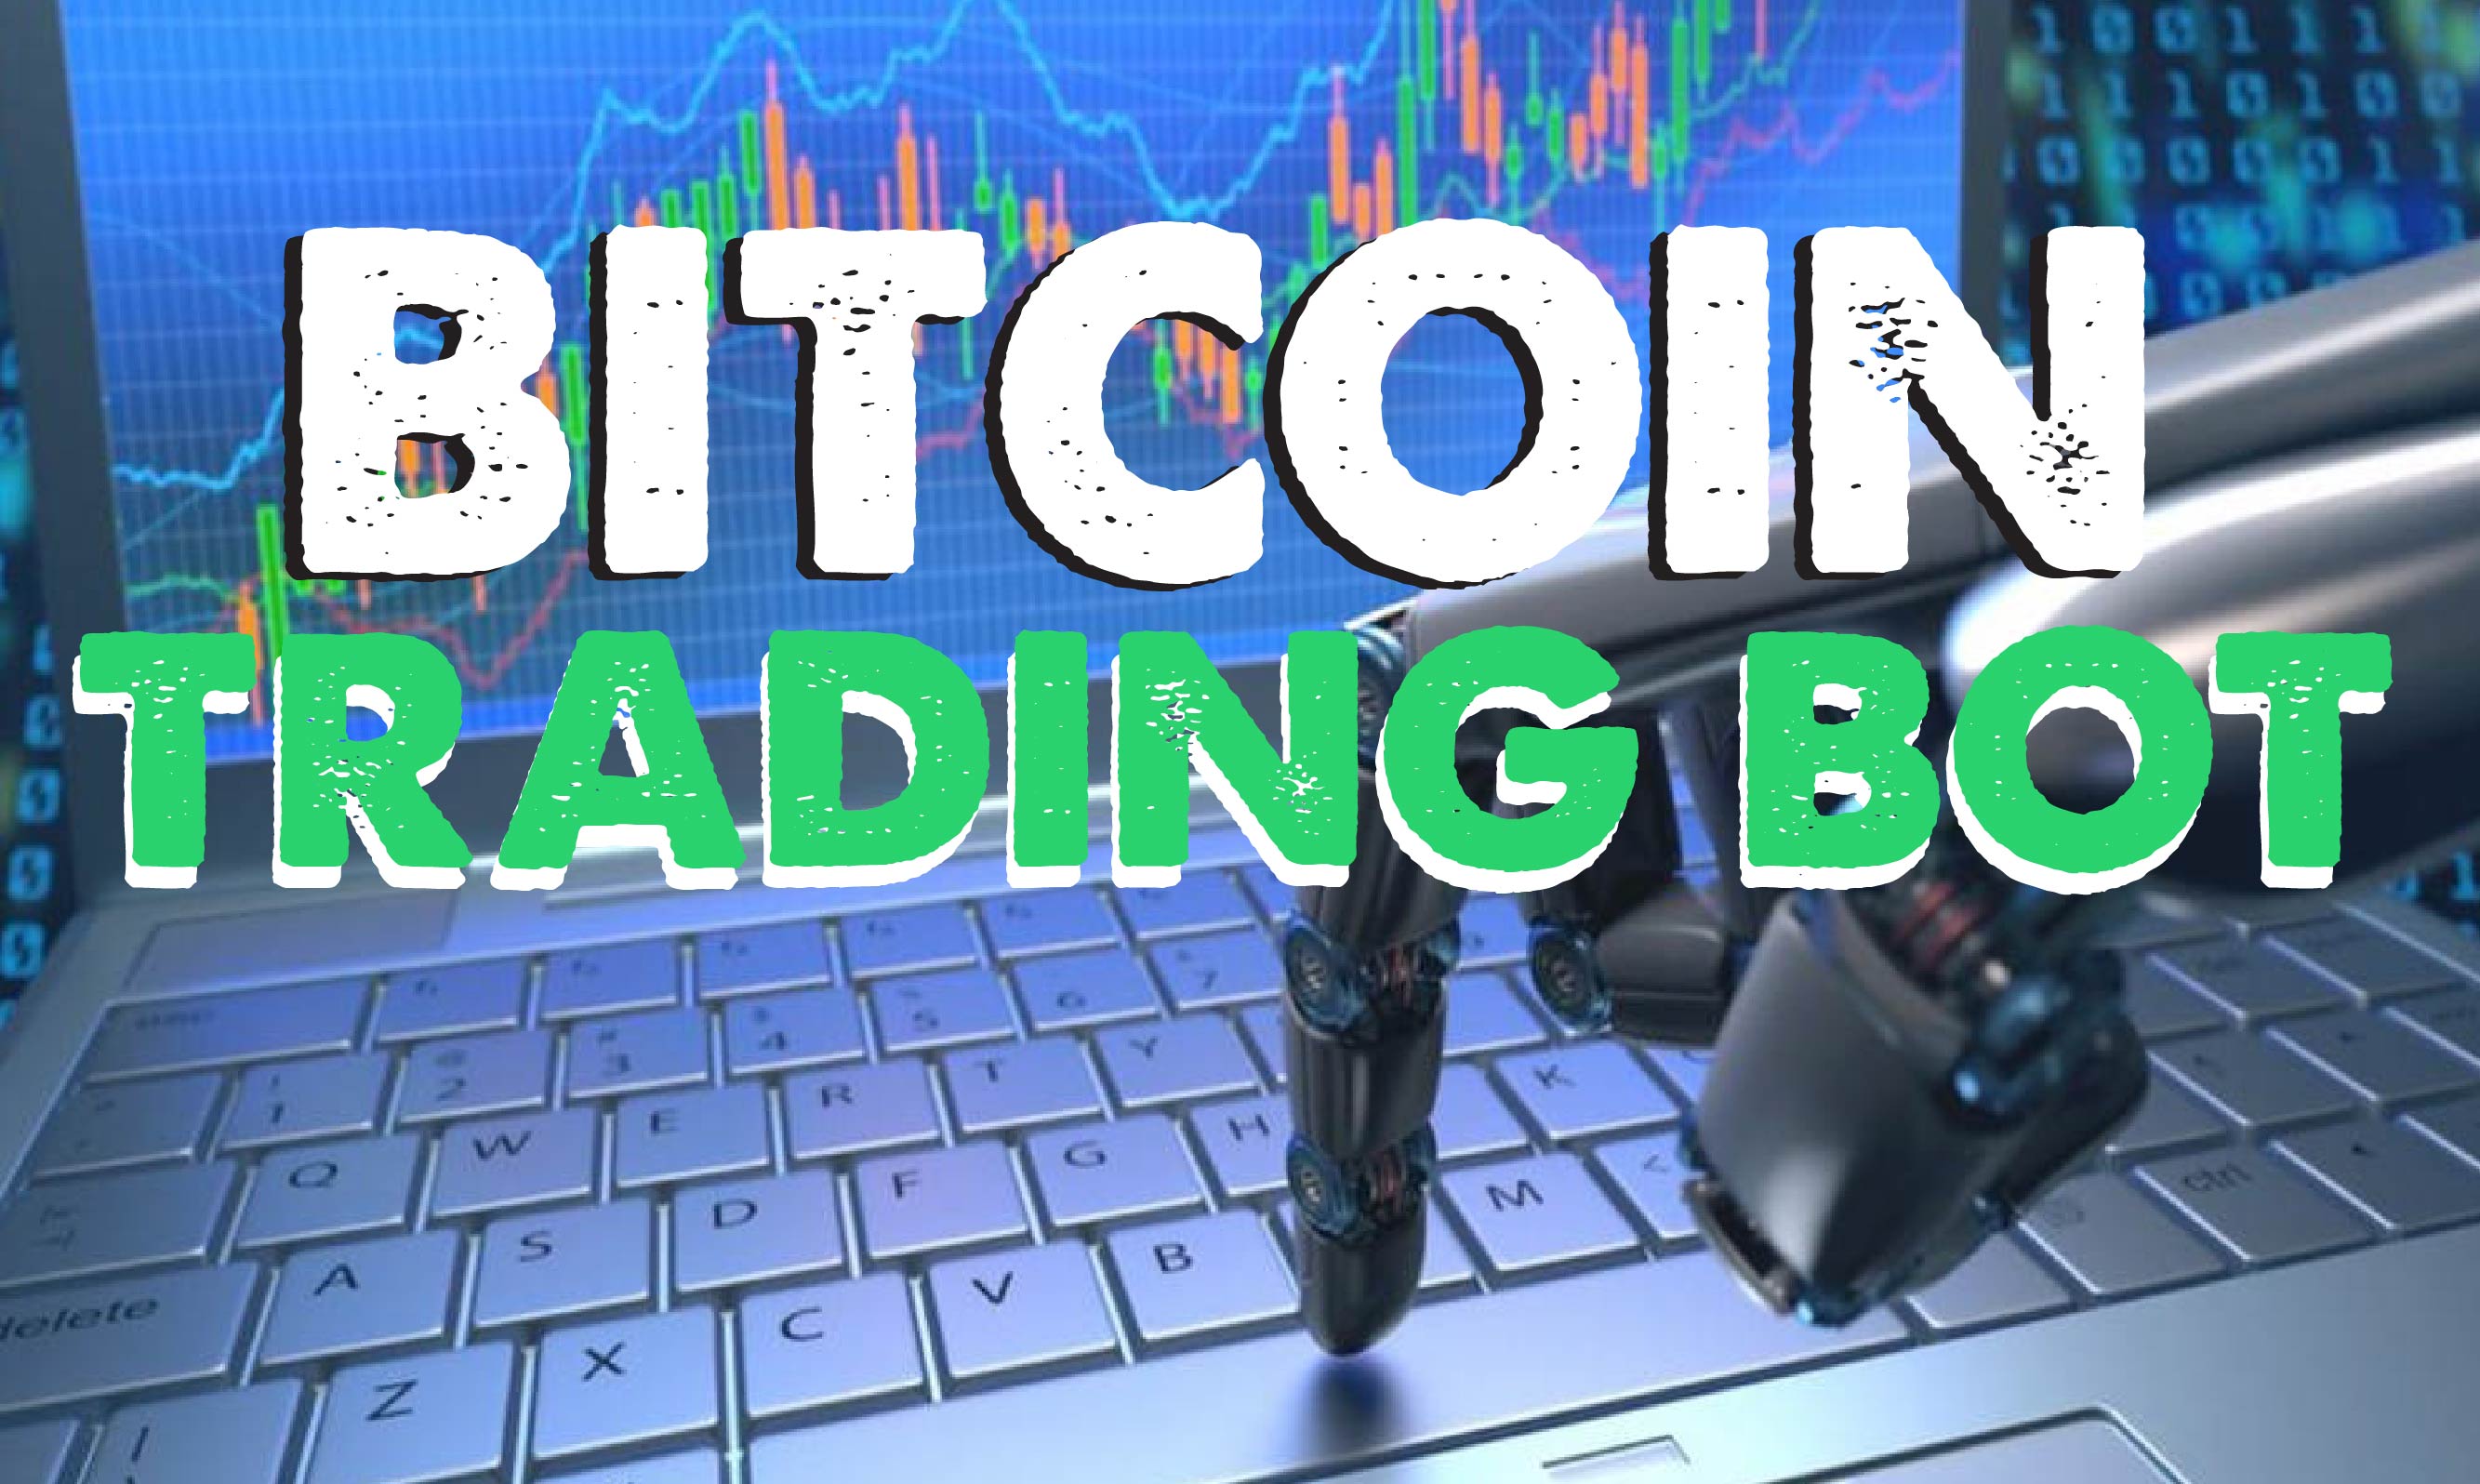 carabuat robot trading bitcoin)